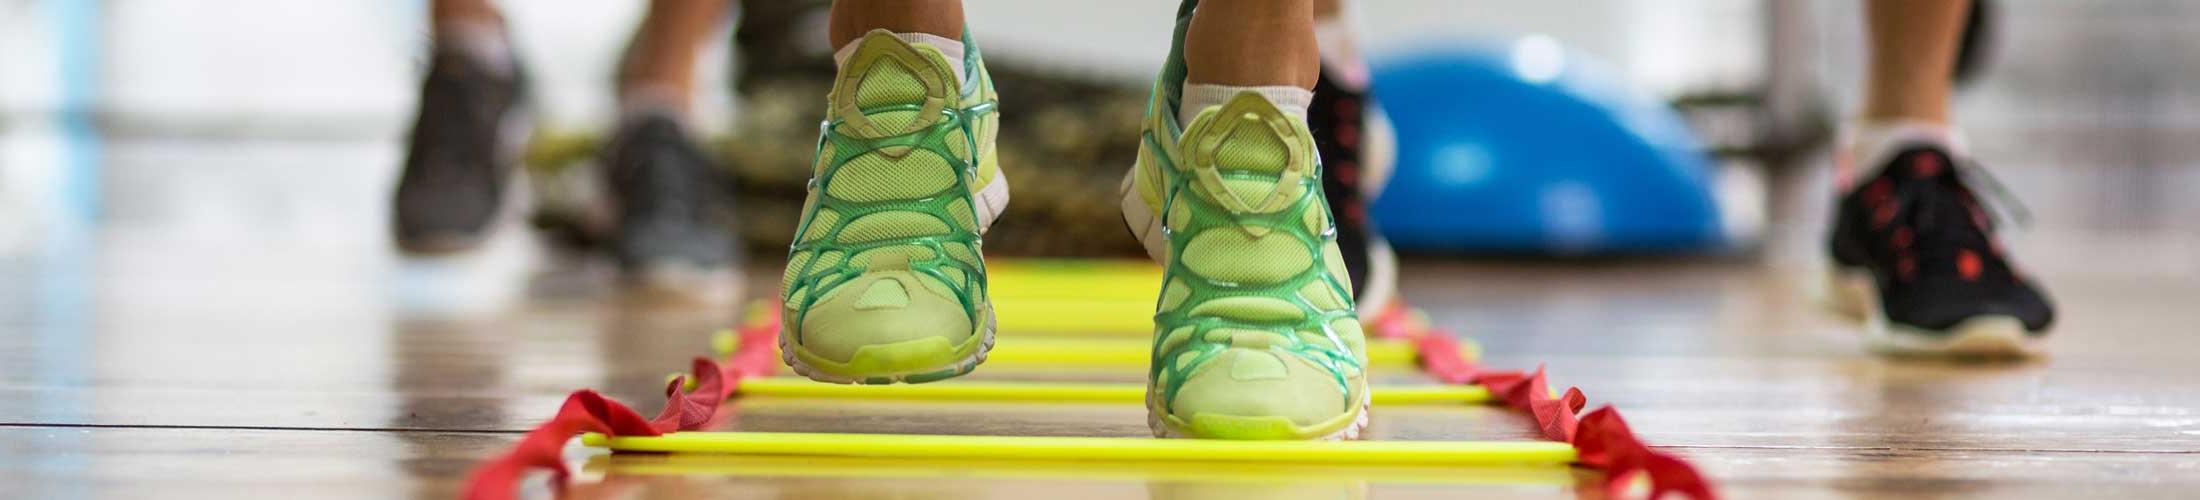 Tennis shoes running through a fitness ladder